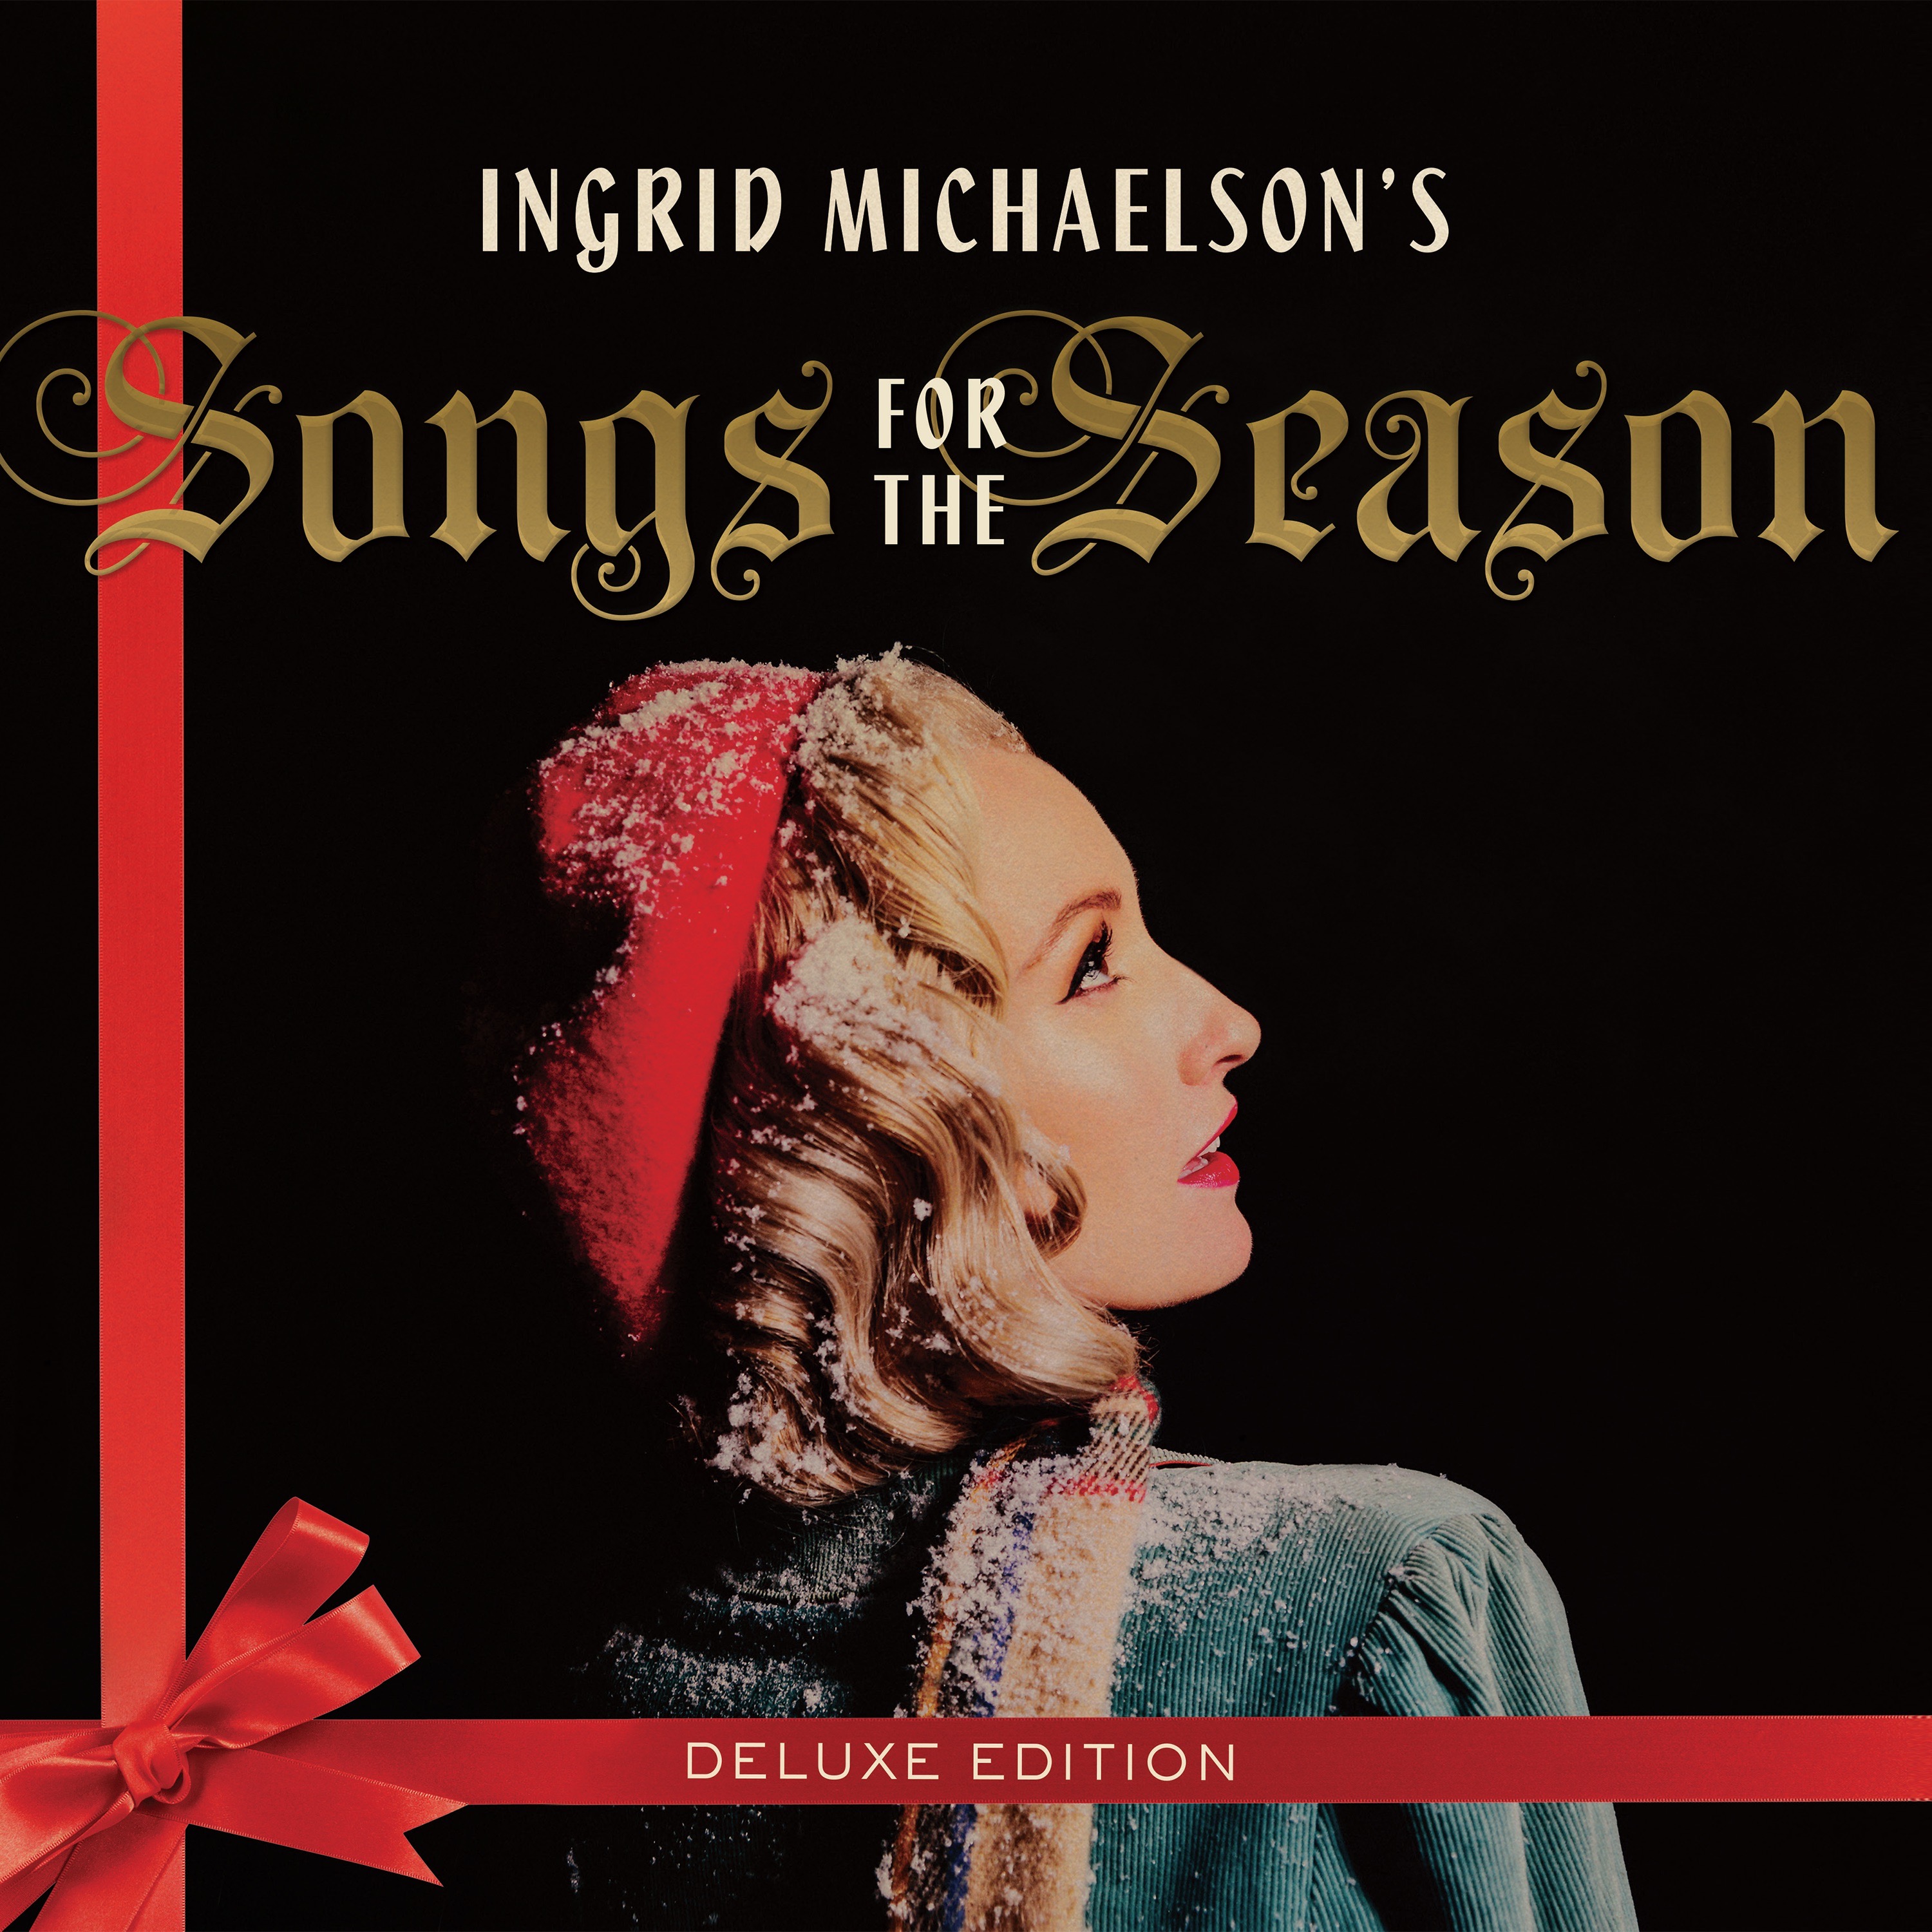 Ingrid Michaelson's 'Songs for the Season' Deluxe Album Cover